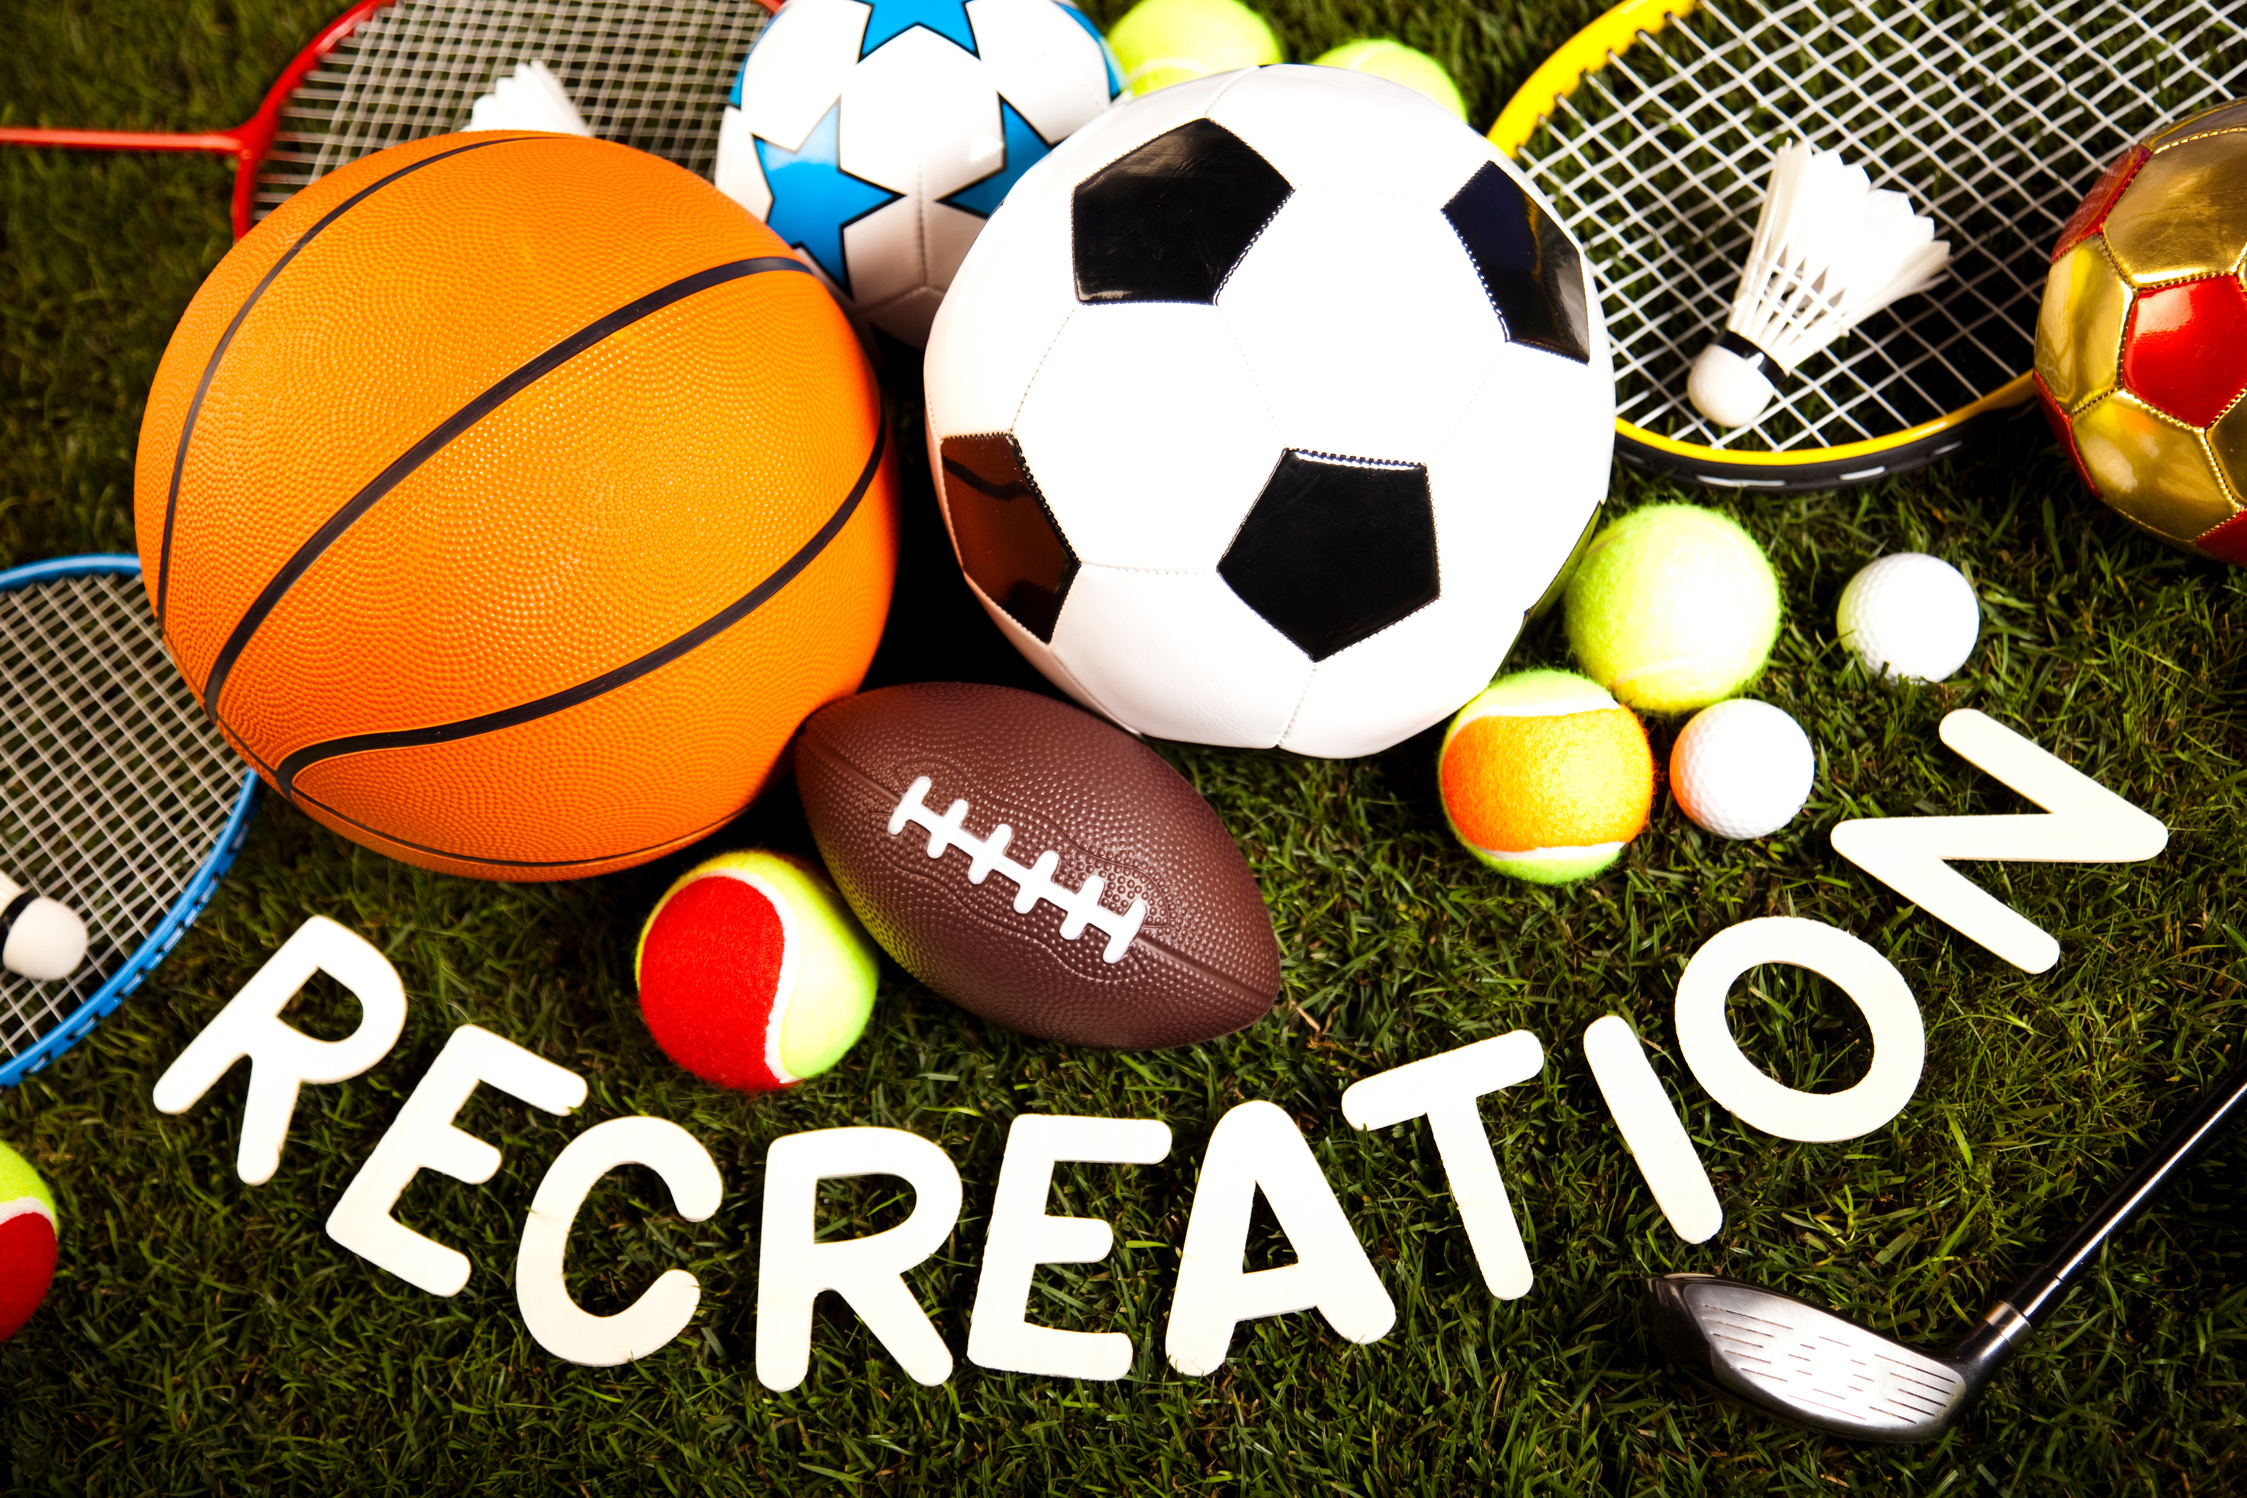 Recreation, sports equipment